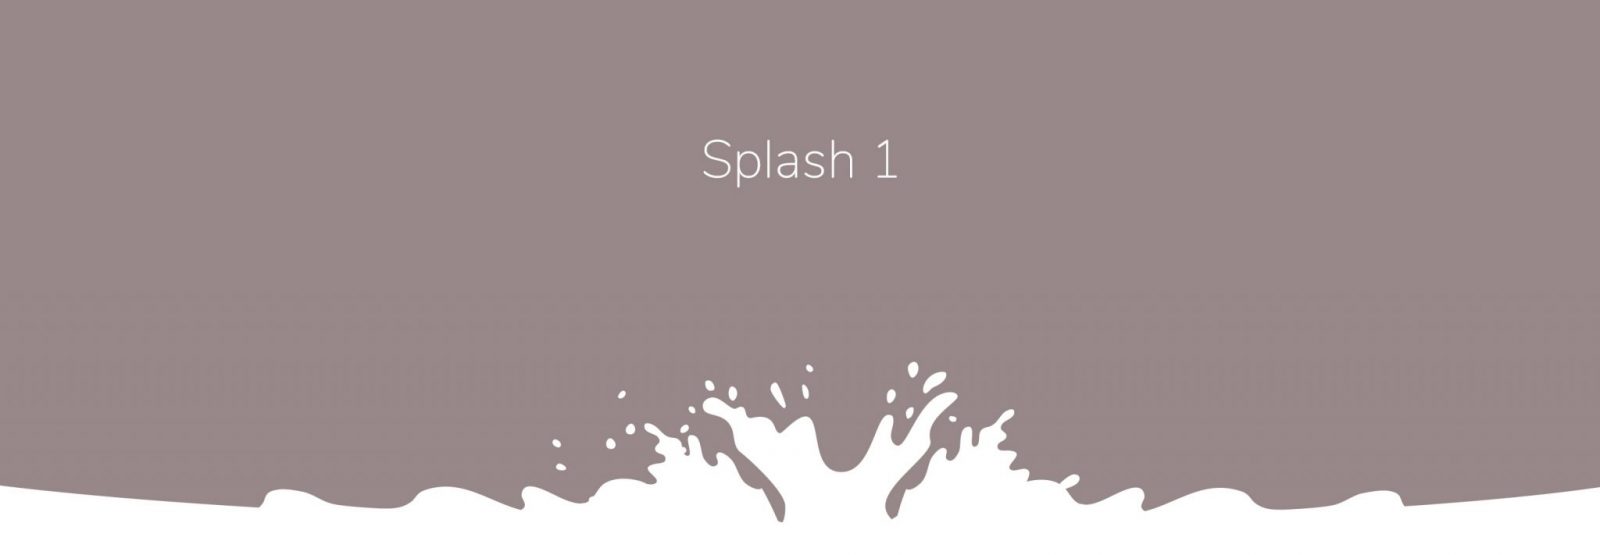 splash1 scaled